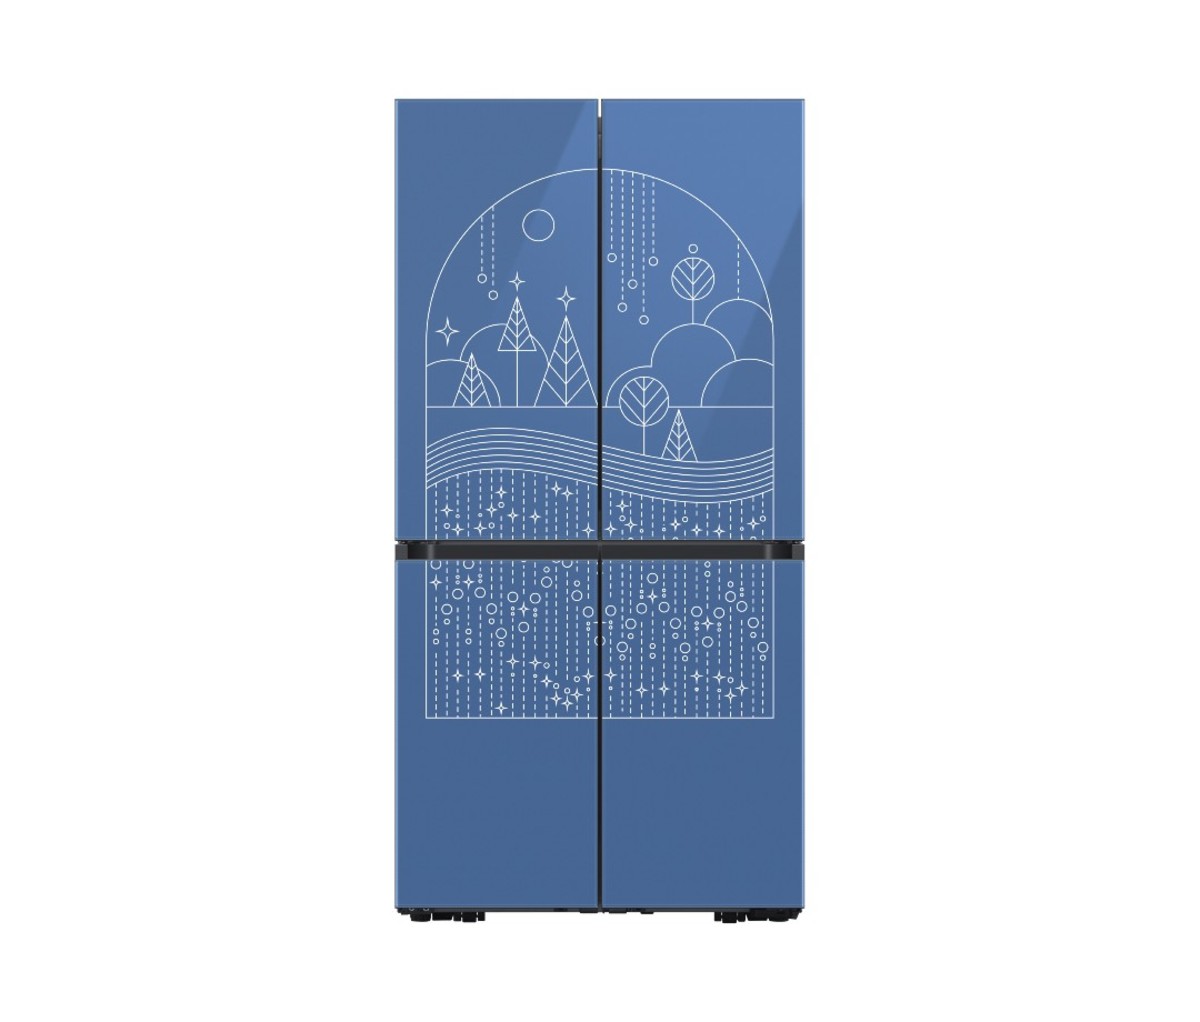 Limited Edition Winter Design for the Bespoke 4-Door Flex Refrigerator